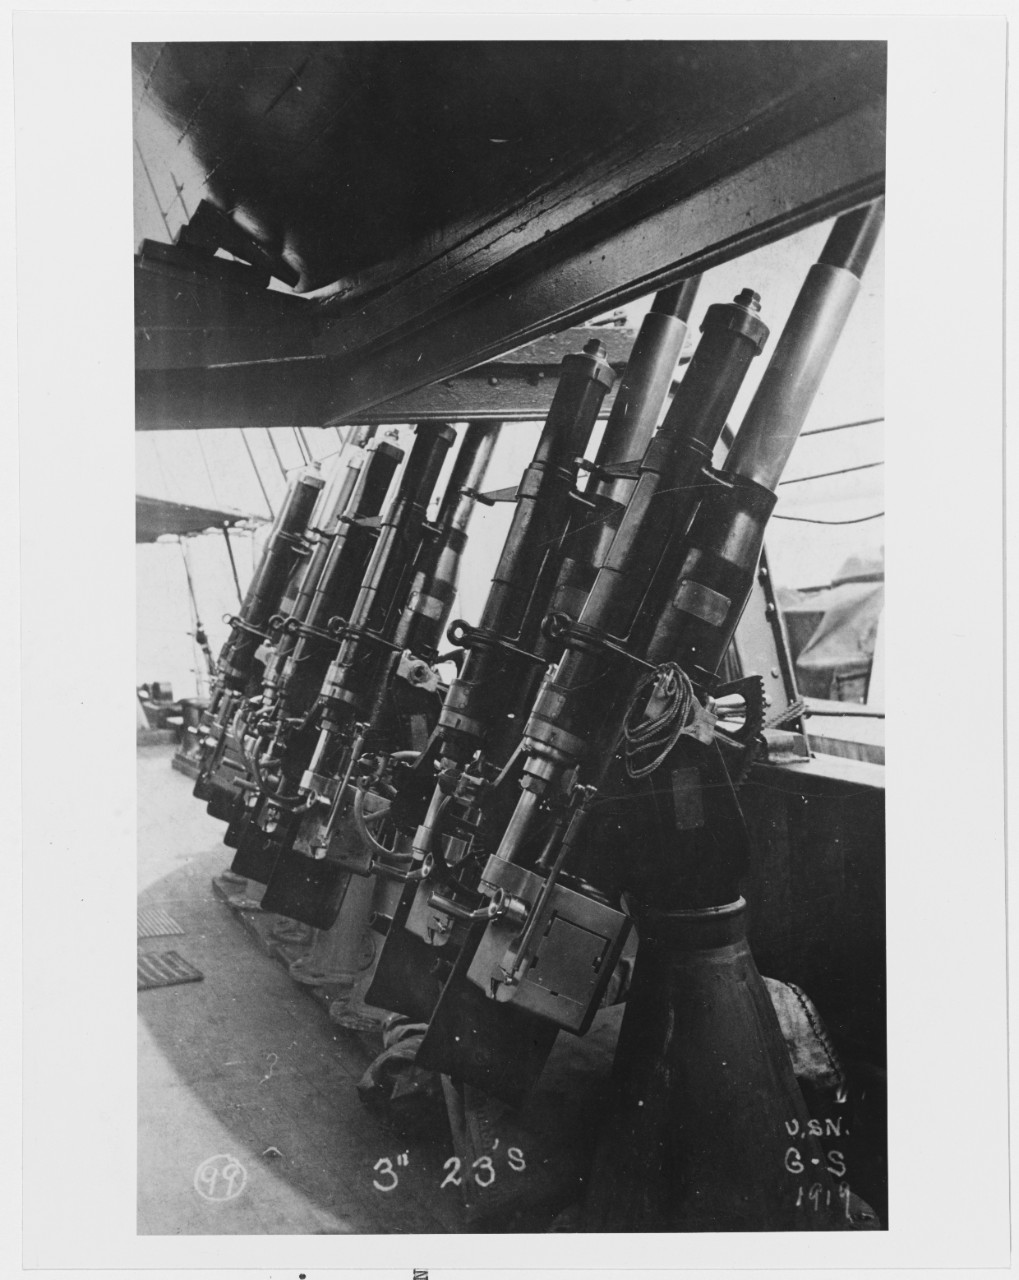 3"/23 anti-aircraft guns